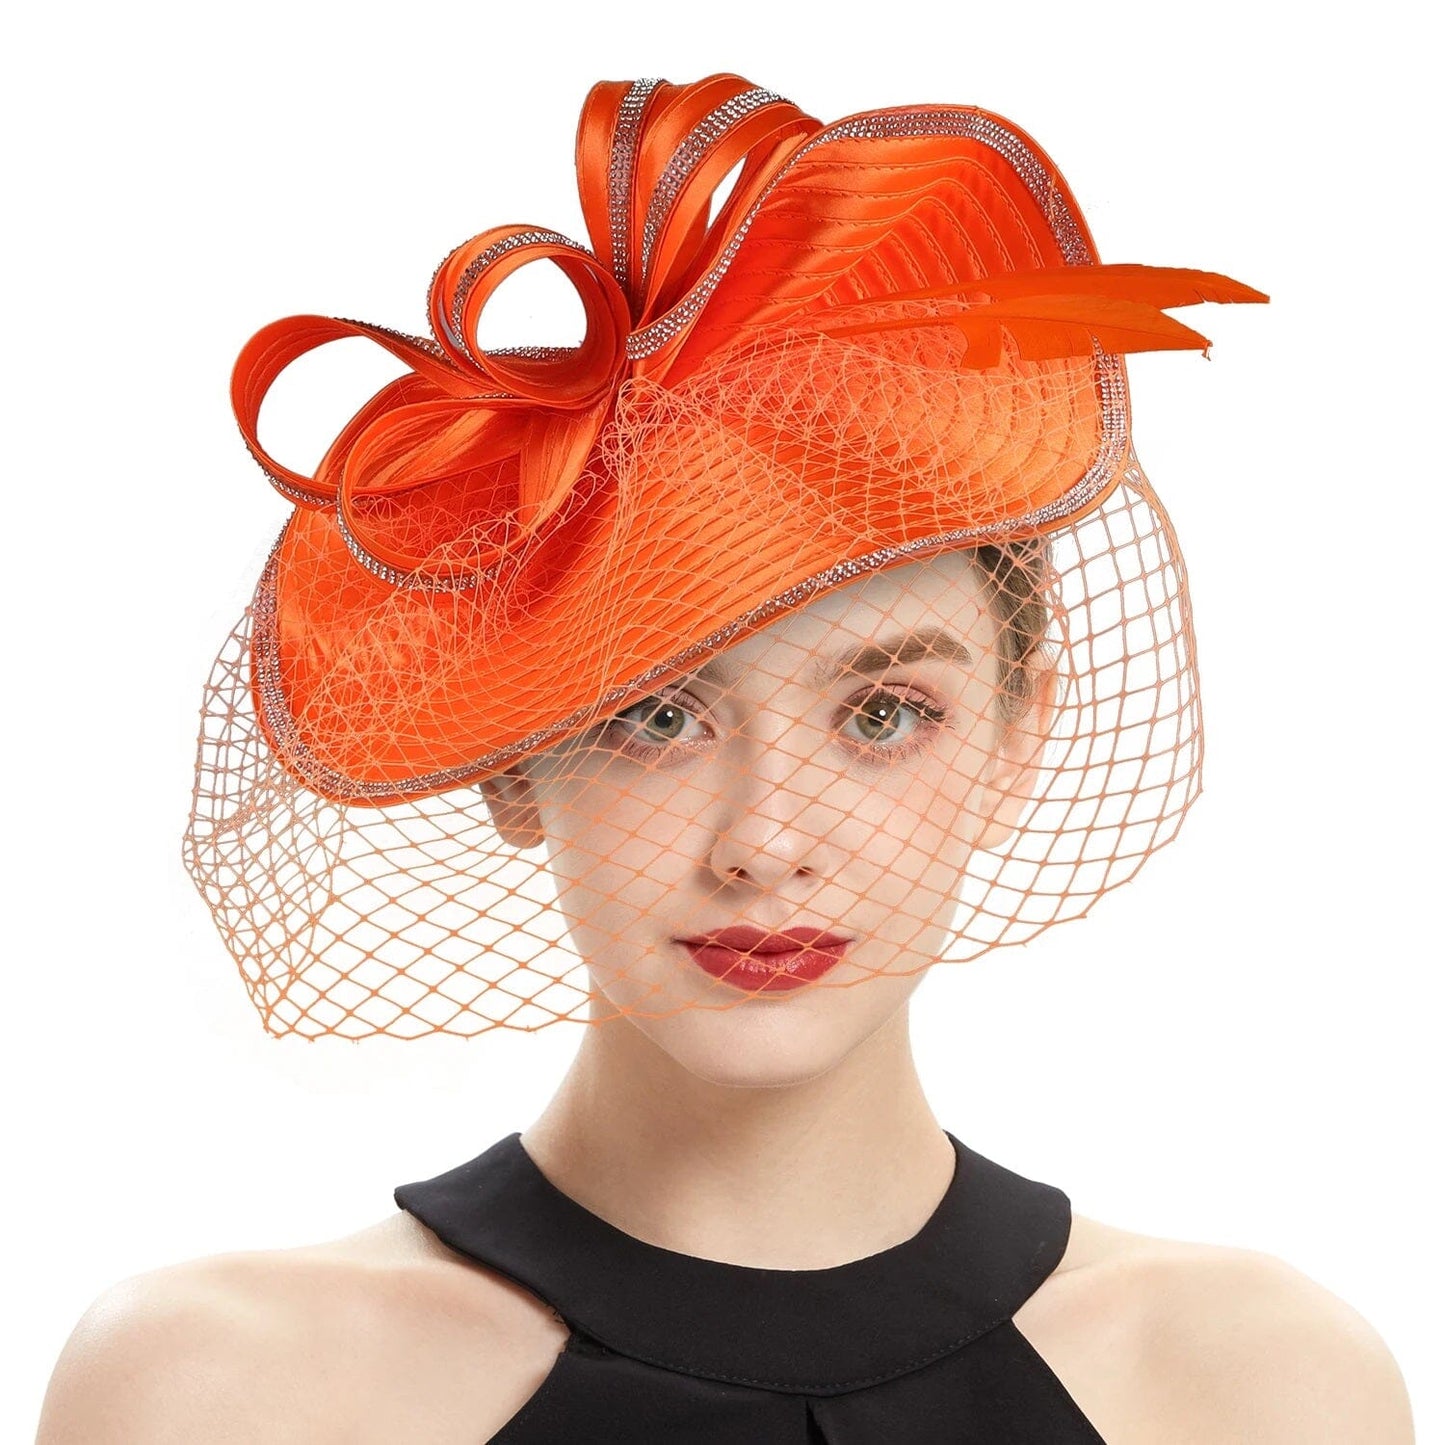 Women Diamond-studded Luxurious Banquet Wedding Dance Party Feather Headwear Fascinator Veil Hat Hat jehouze 1-orange 